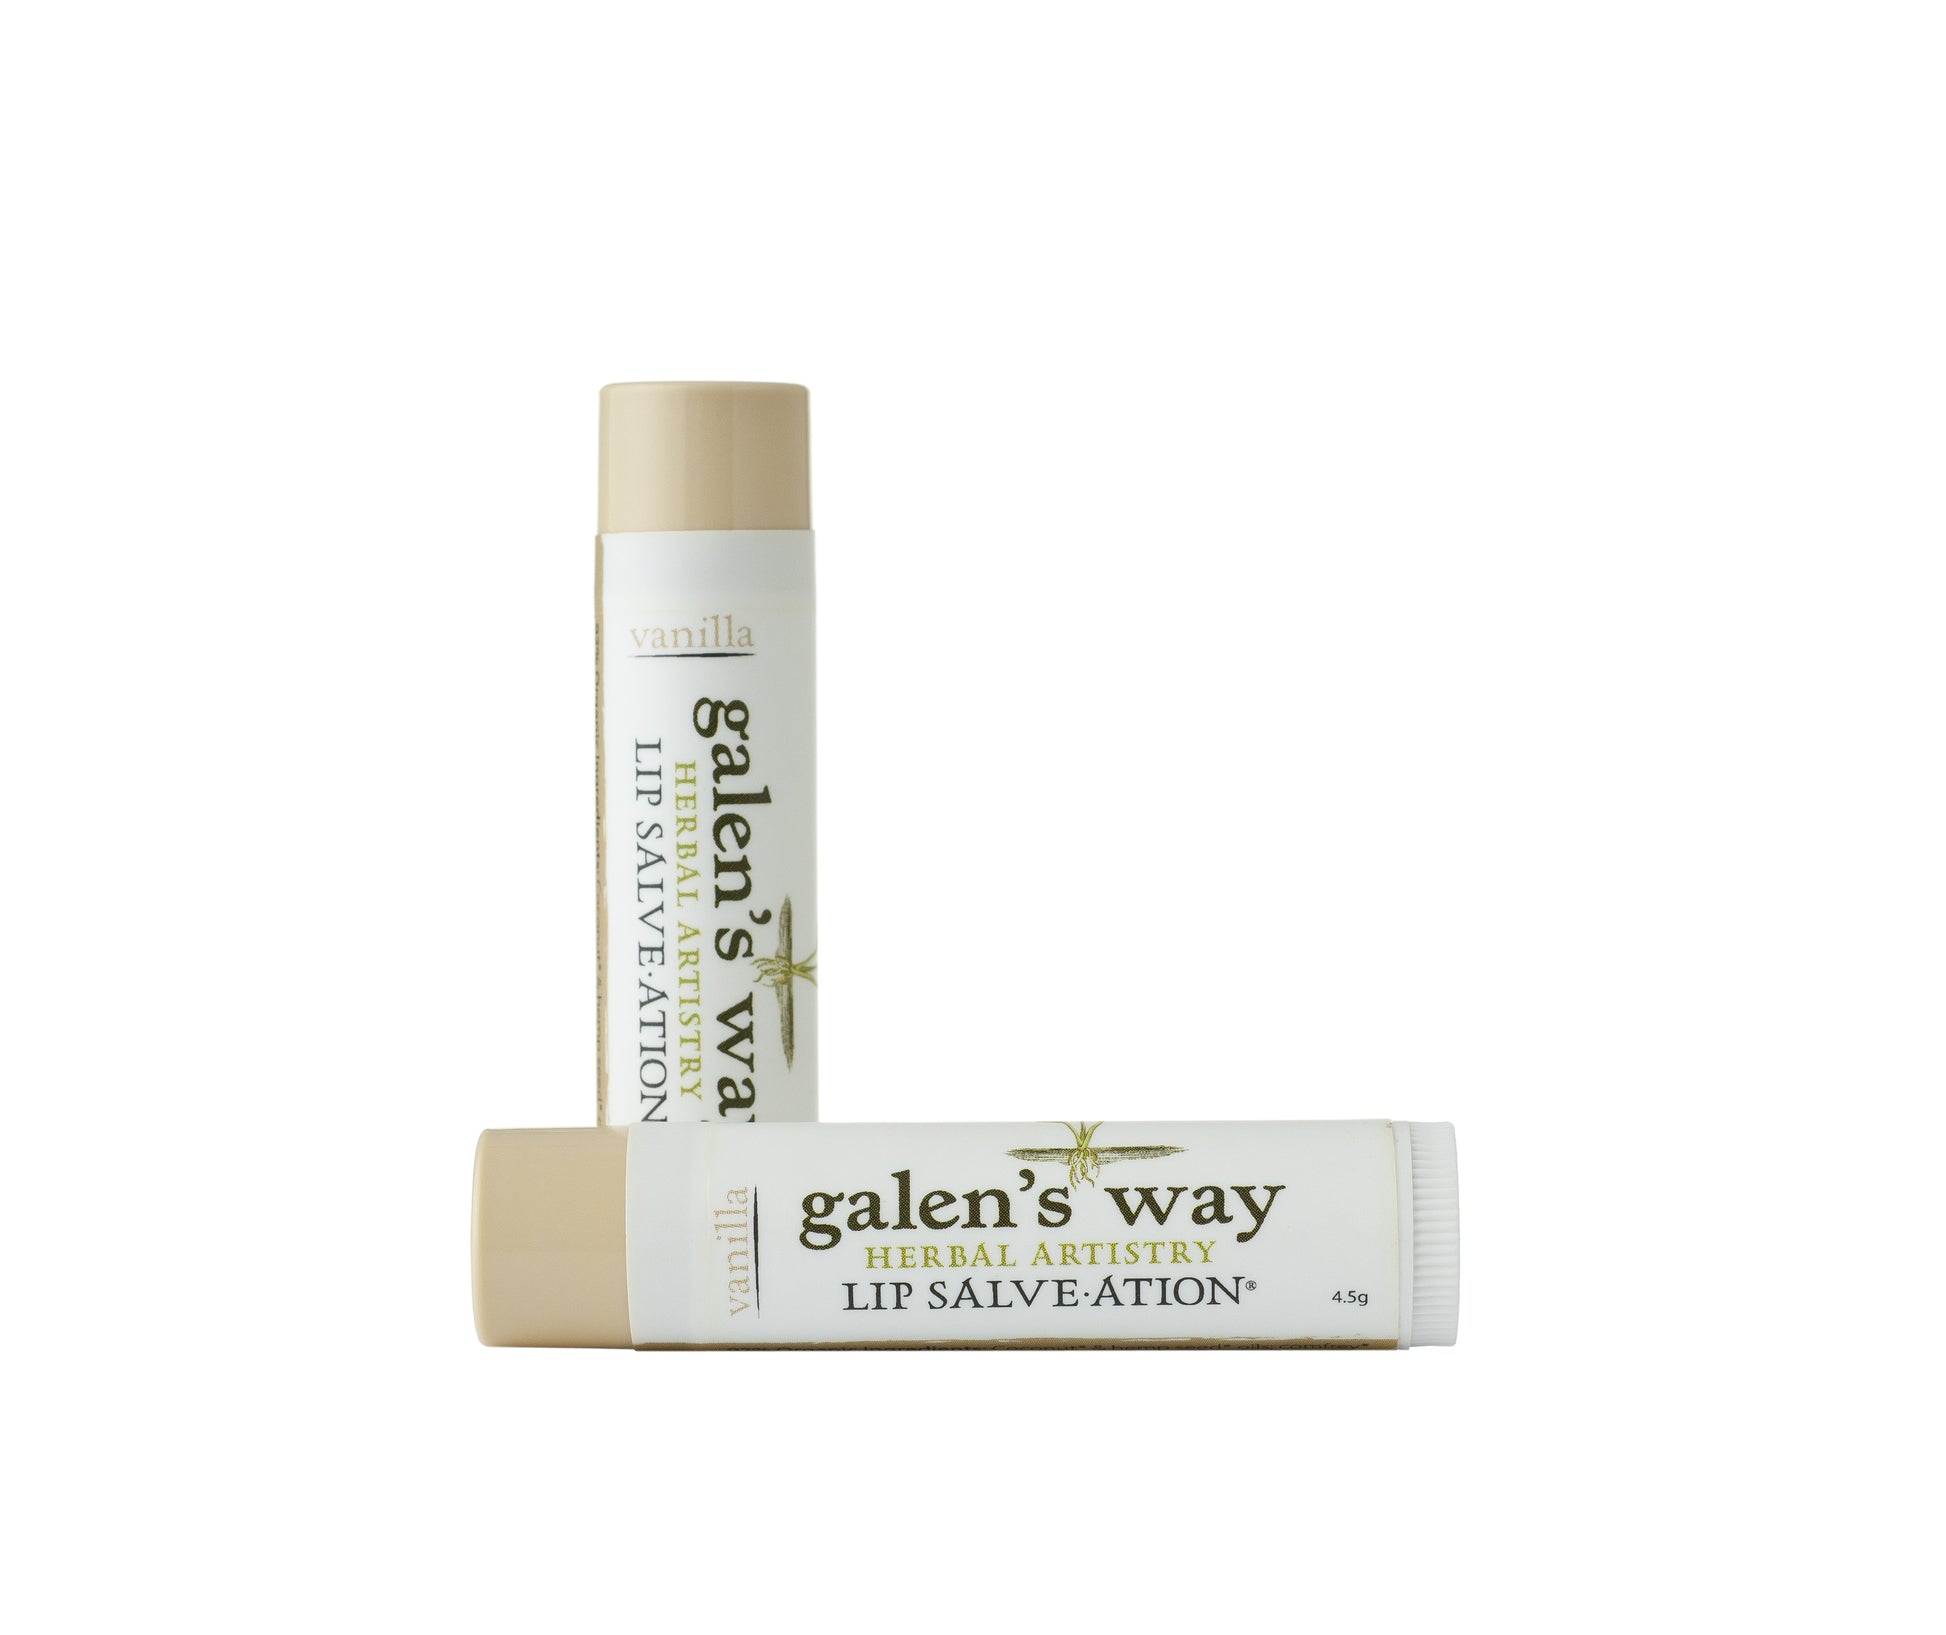 Galen's Way Lip Salve-ation Vanilla